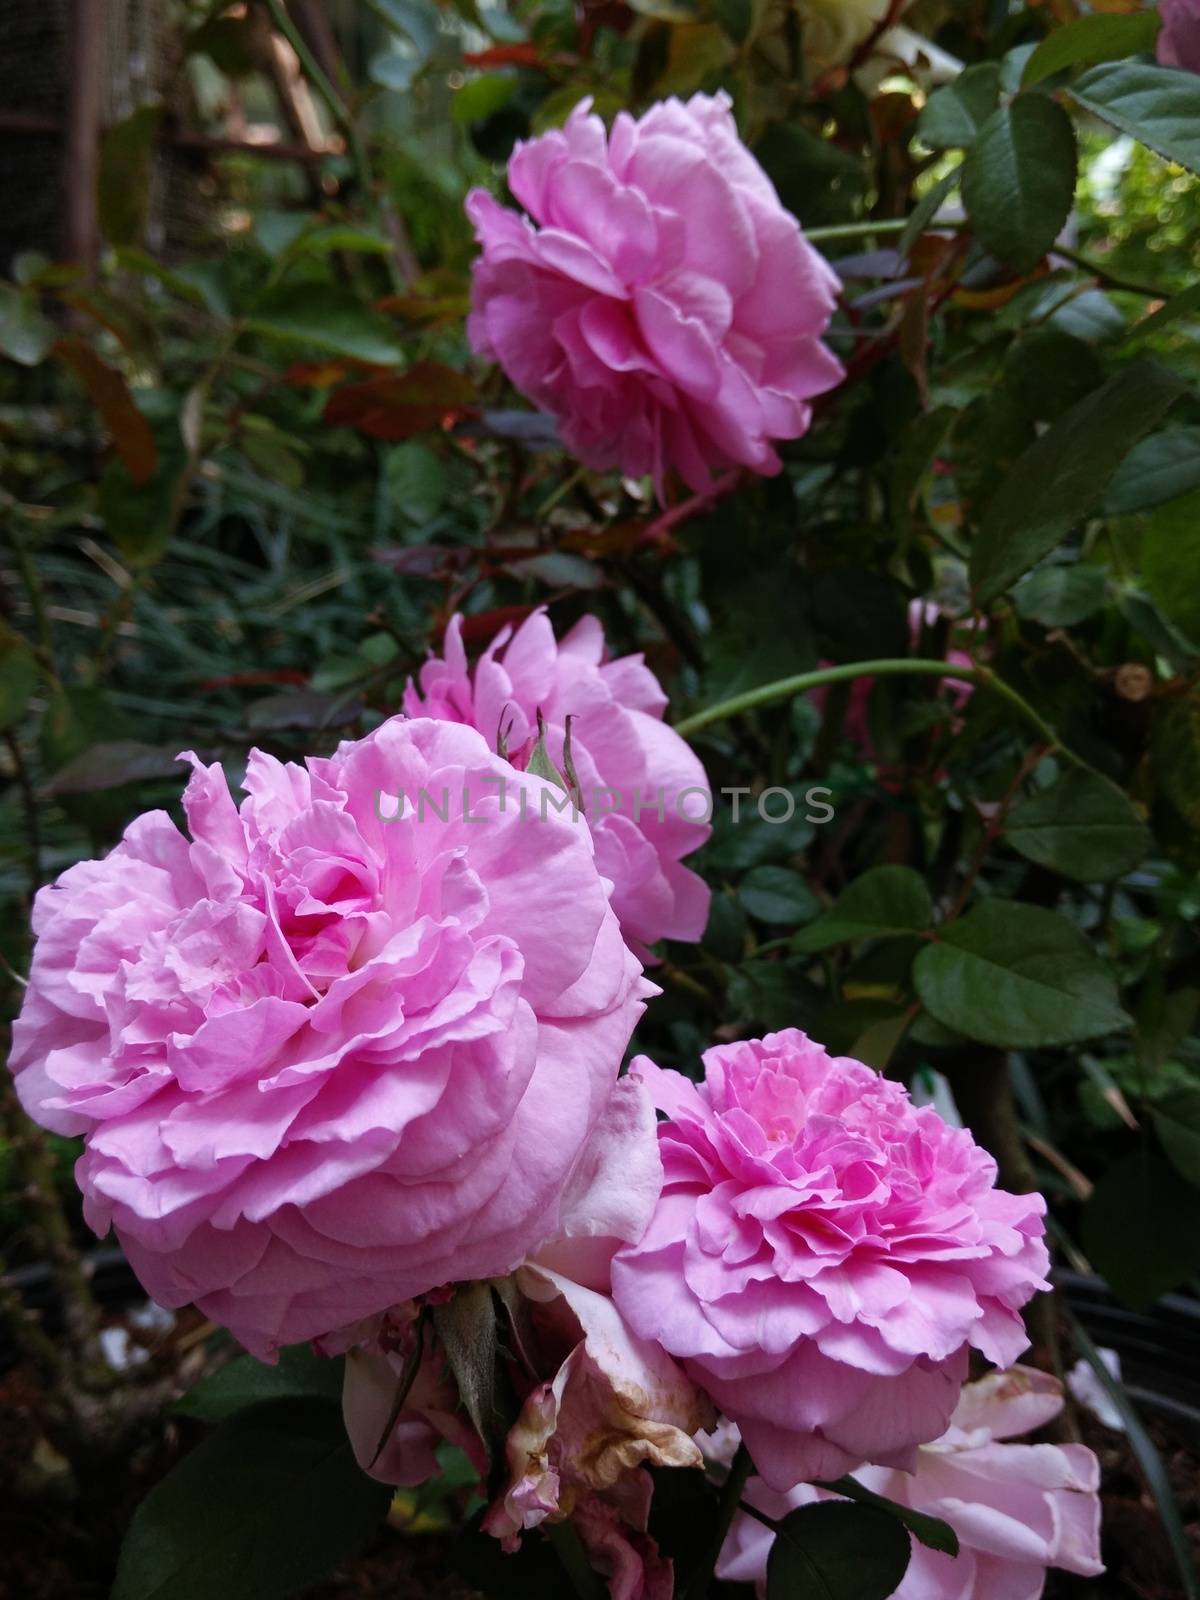 Pink Roses in the Flower Garden